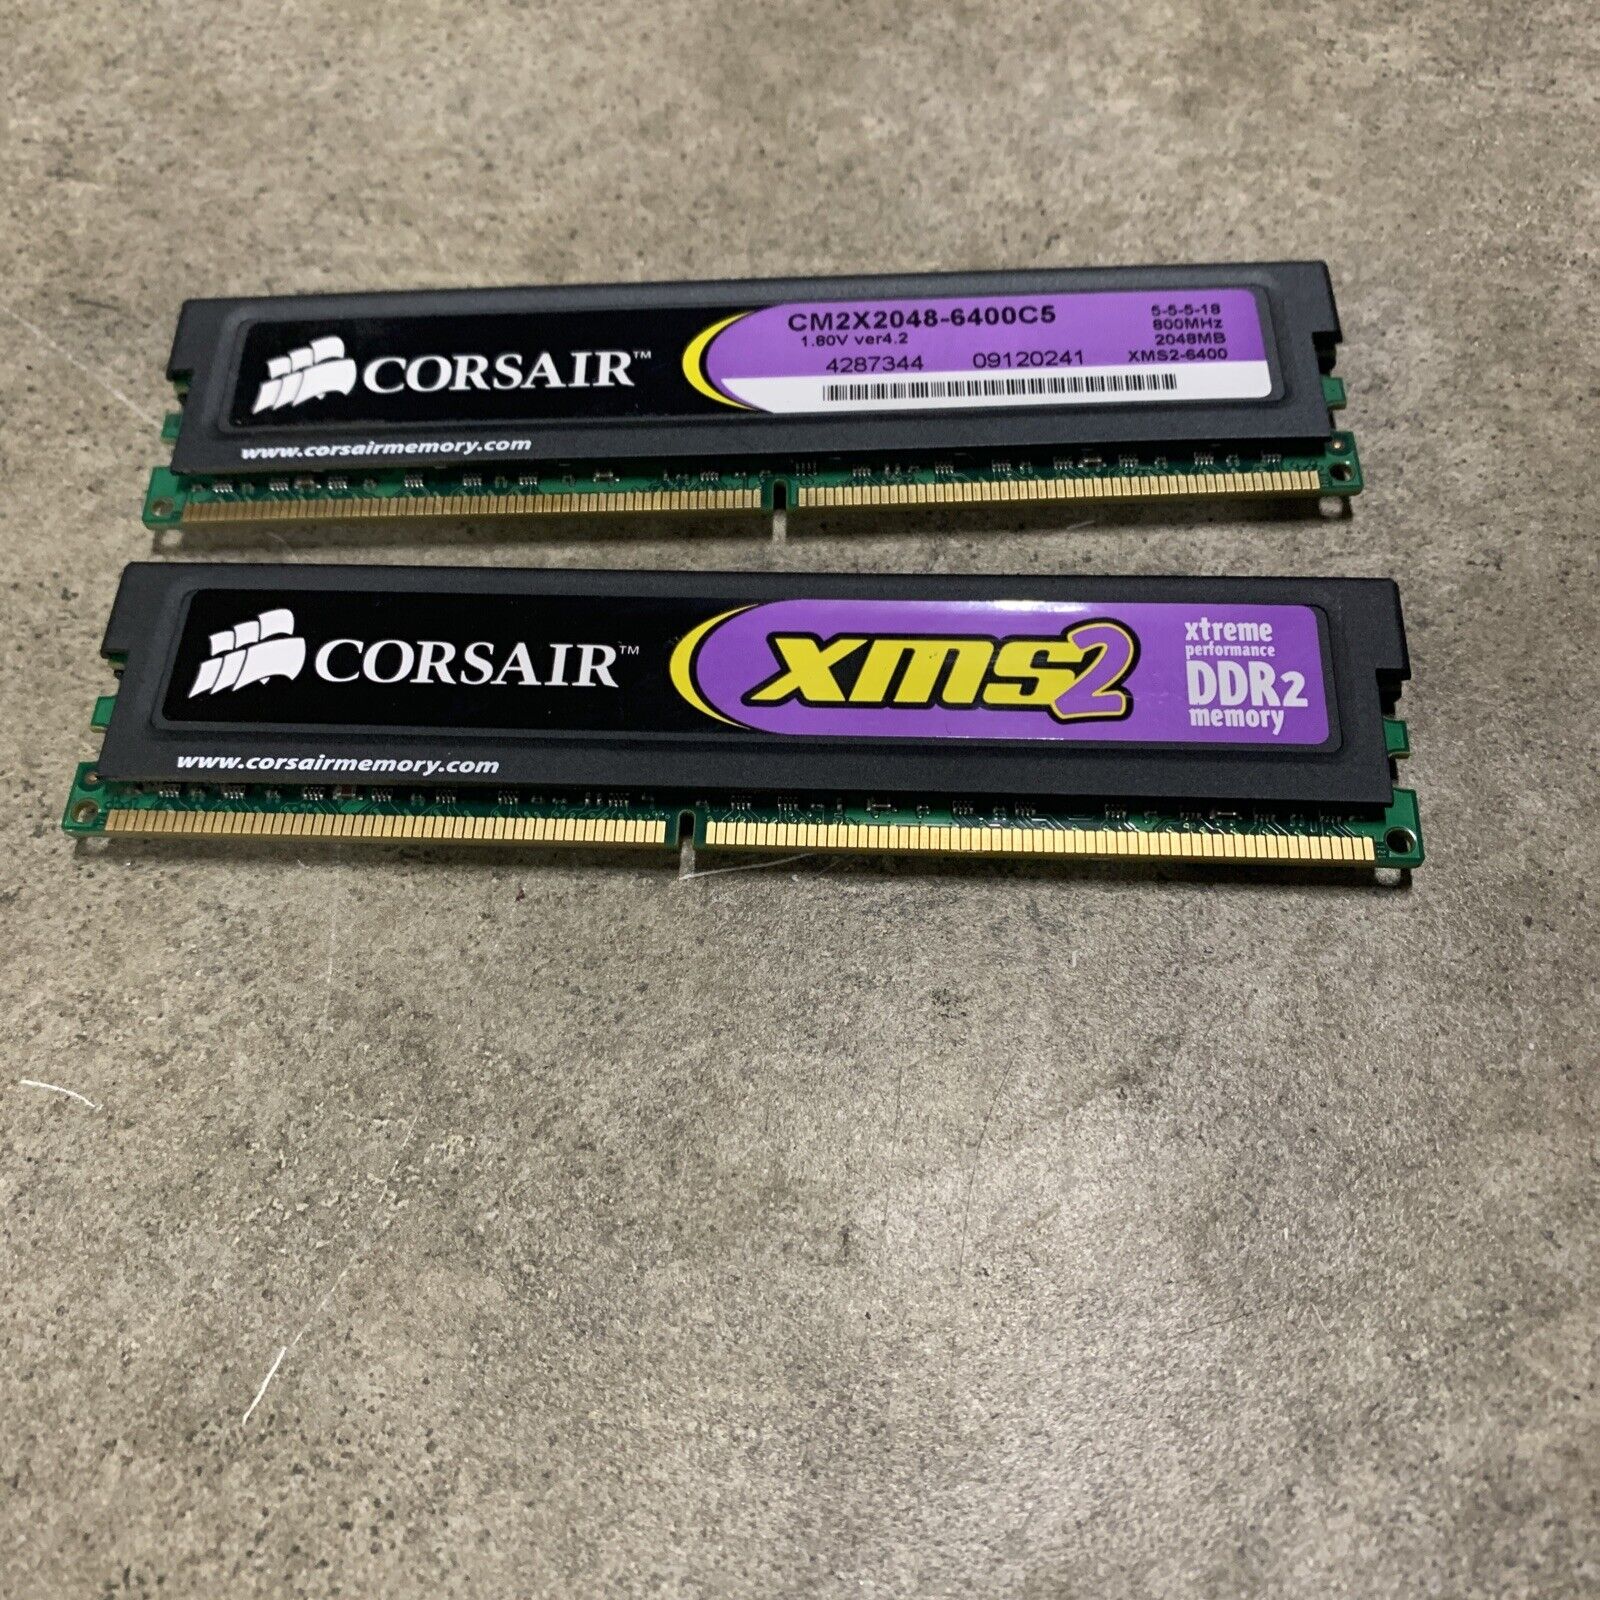 Pair Of 2Corsair XMS2 Xtreme Performance 2x 2gb DDR2 RAM CM2X2048-6400C5 ver4.2